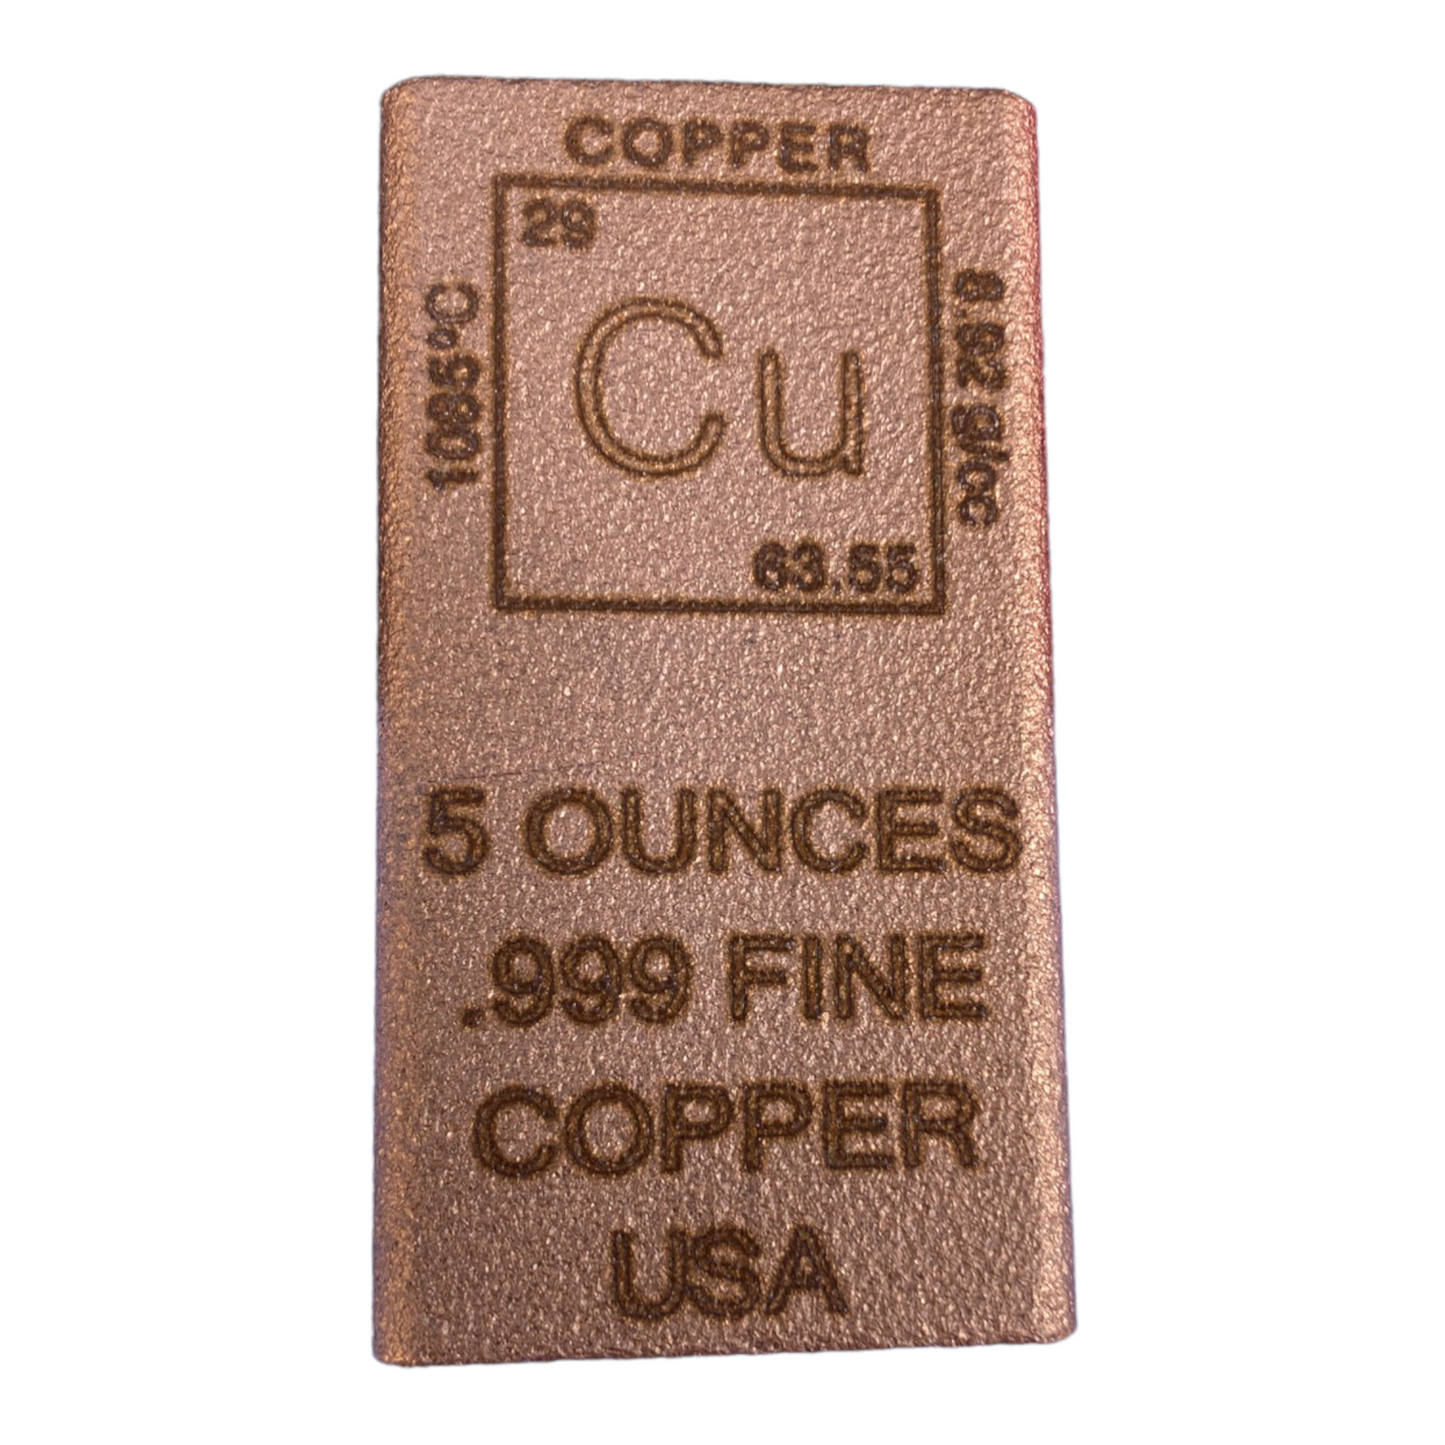 Cu Element 5 oz Copper Bullion Bar by Liberty Copper